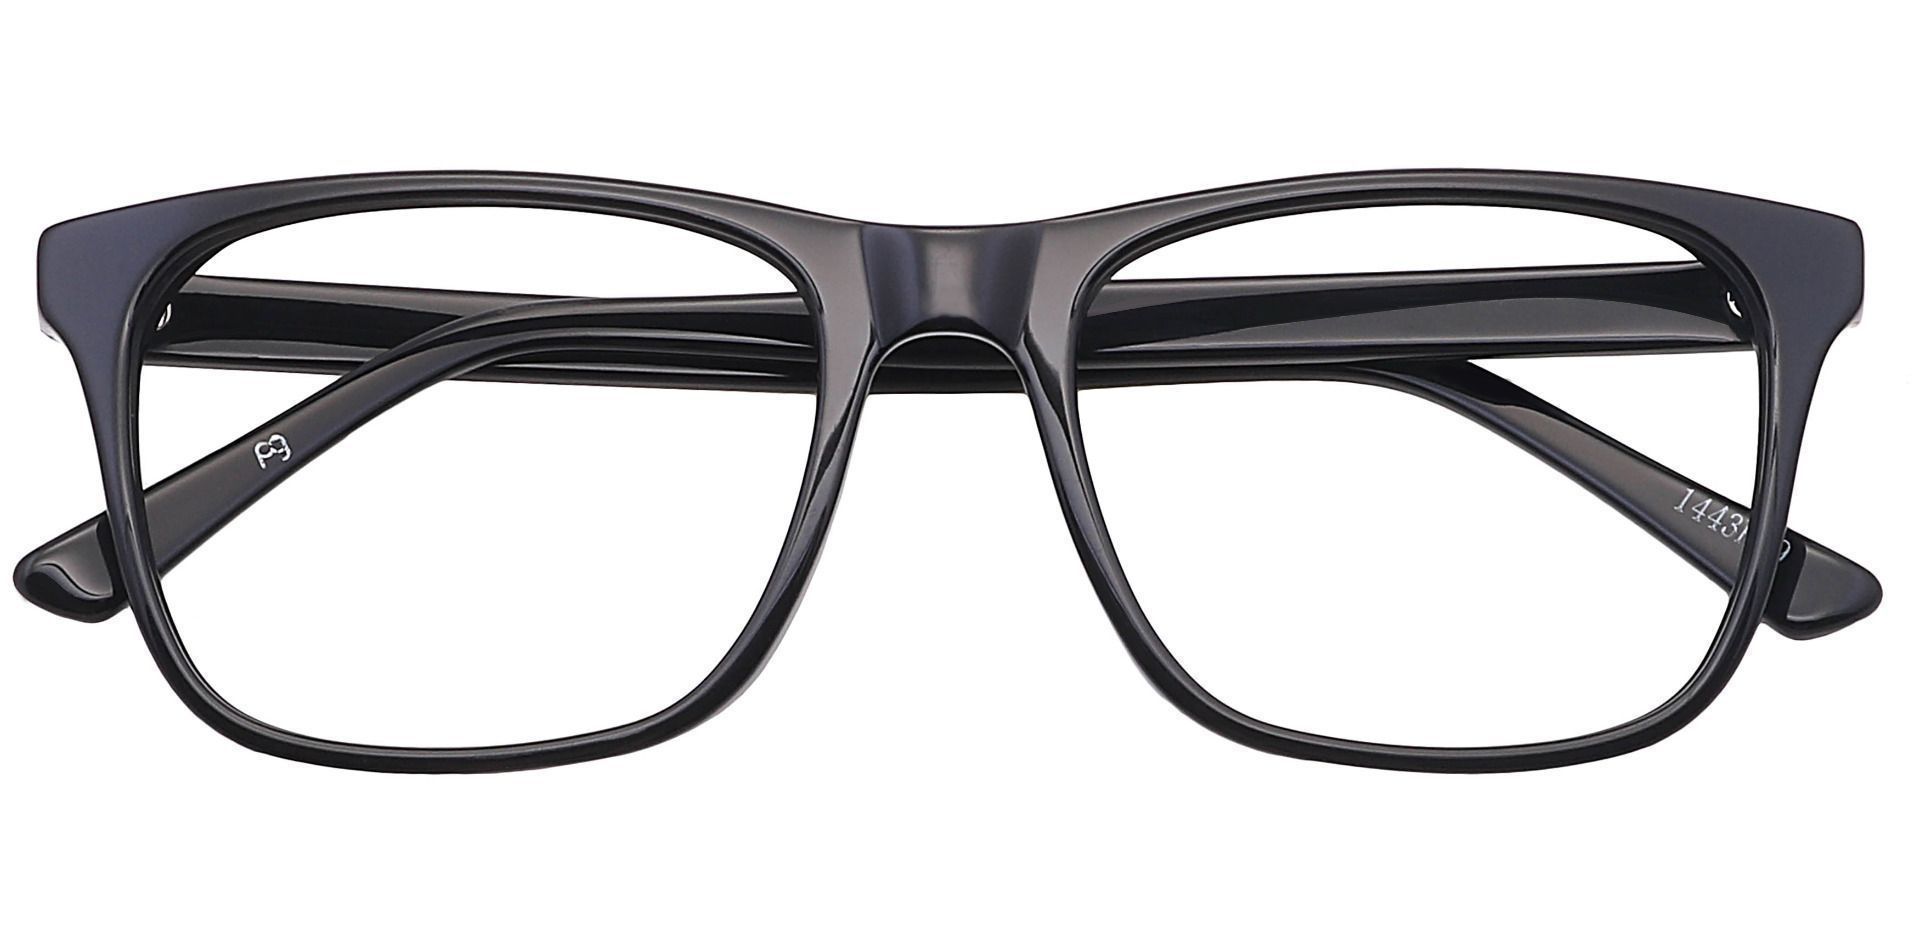 Cantina Square Lined Bifocal Glasses - Black